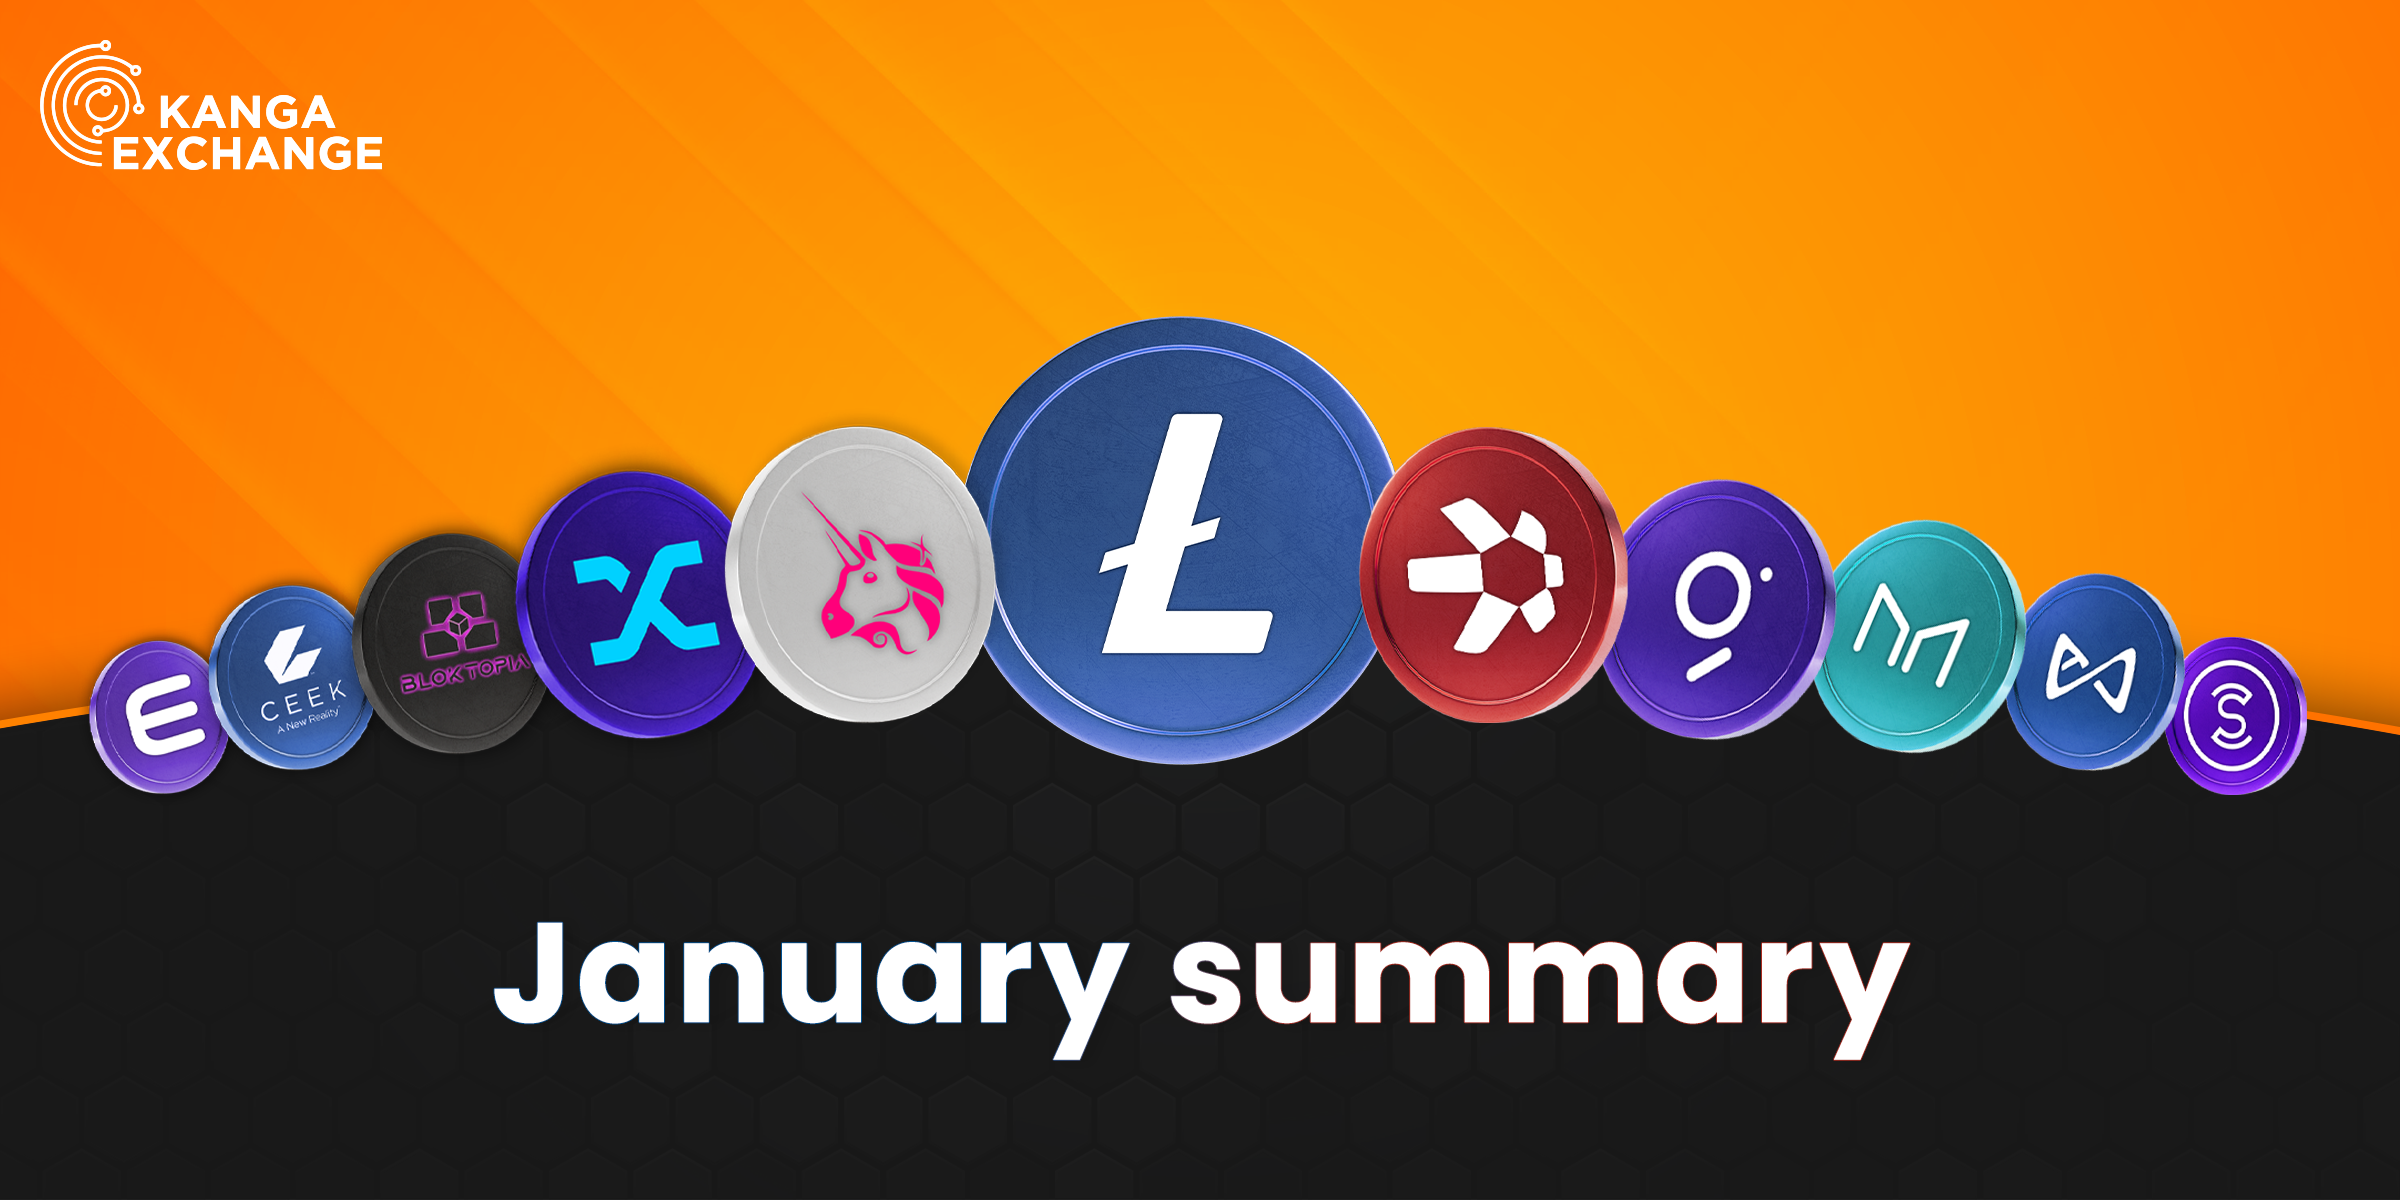 January Summary - New Listings on Kanga Exchange